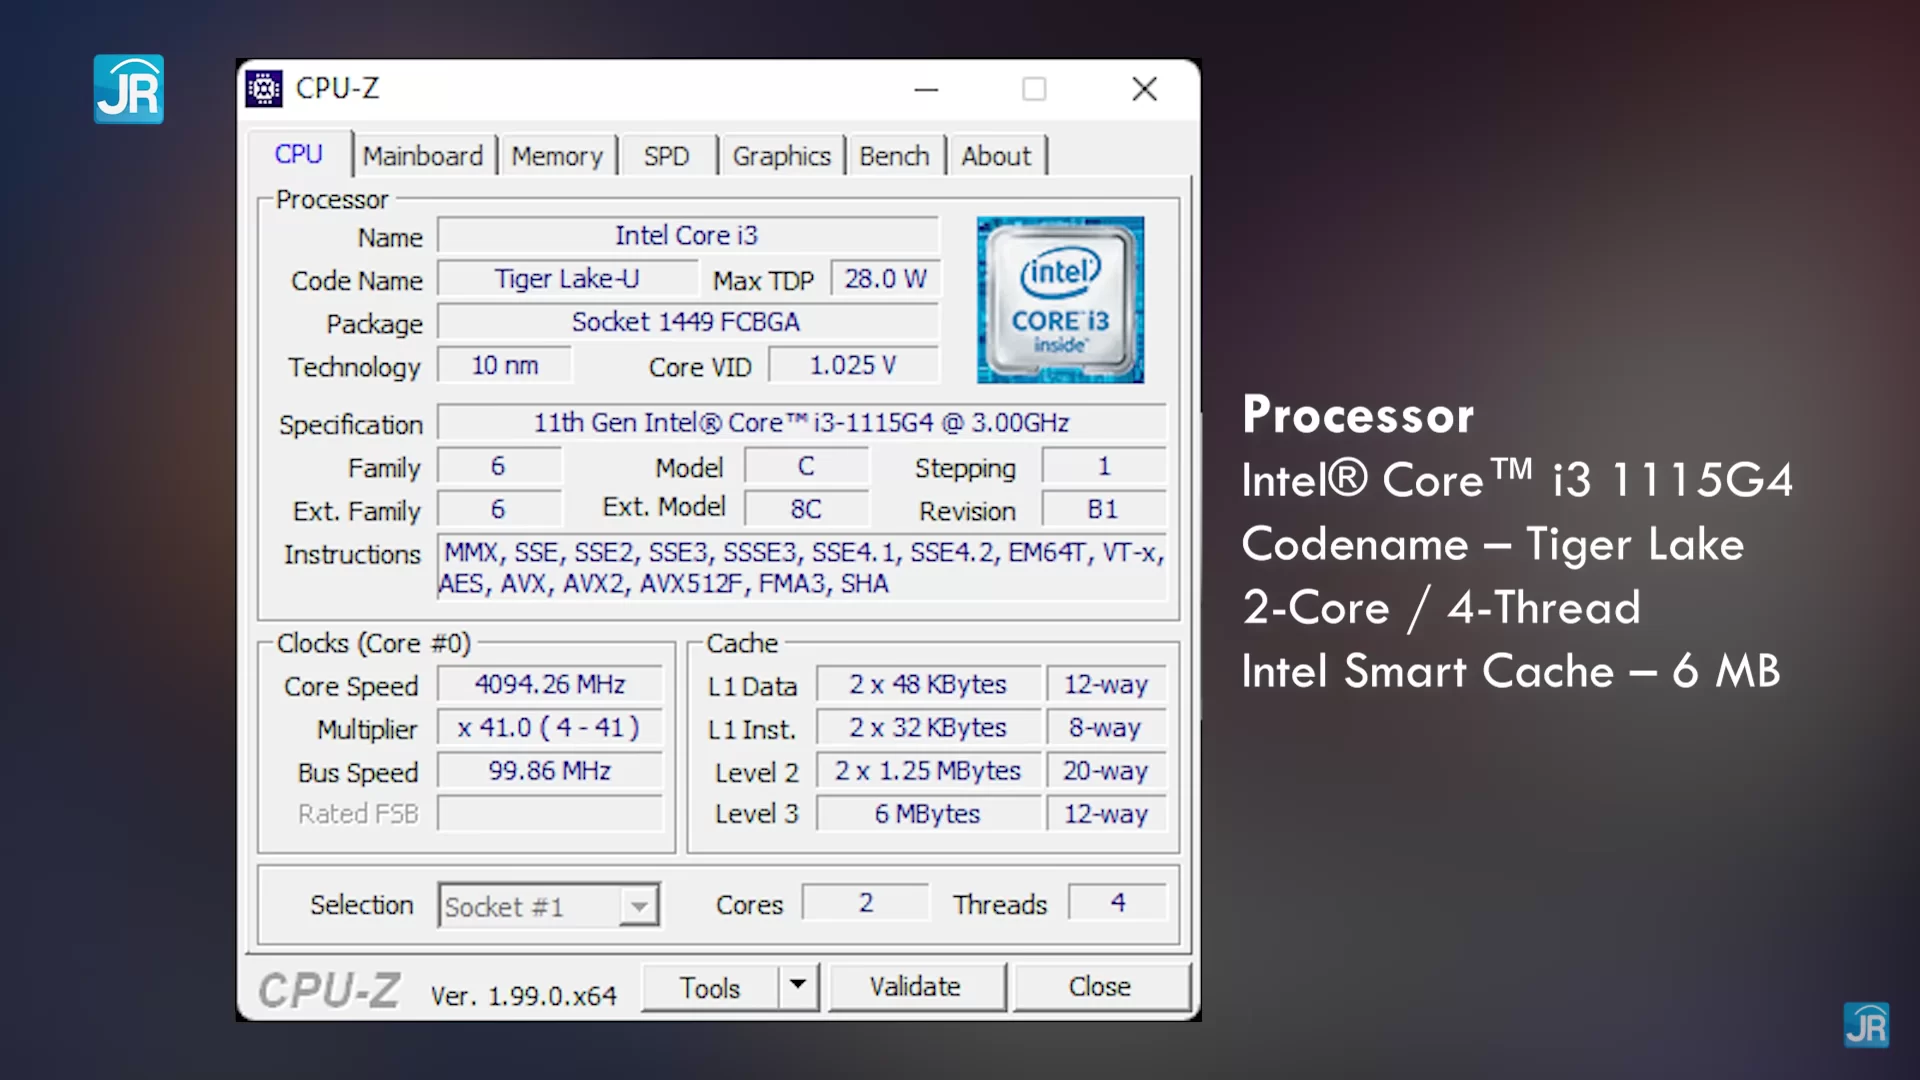 Intel r core tm i3 1115g4. Intel Core i3 1115g4 in CPU-Z. Intel Core i3 1115g4 характеристики. Процессор Intel i3-1115g4. Core i3-1115g4.